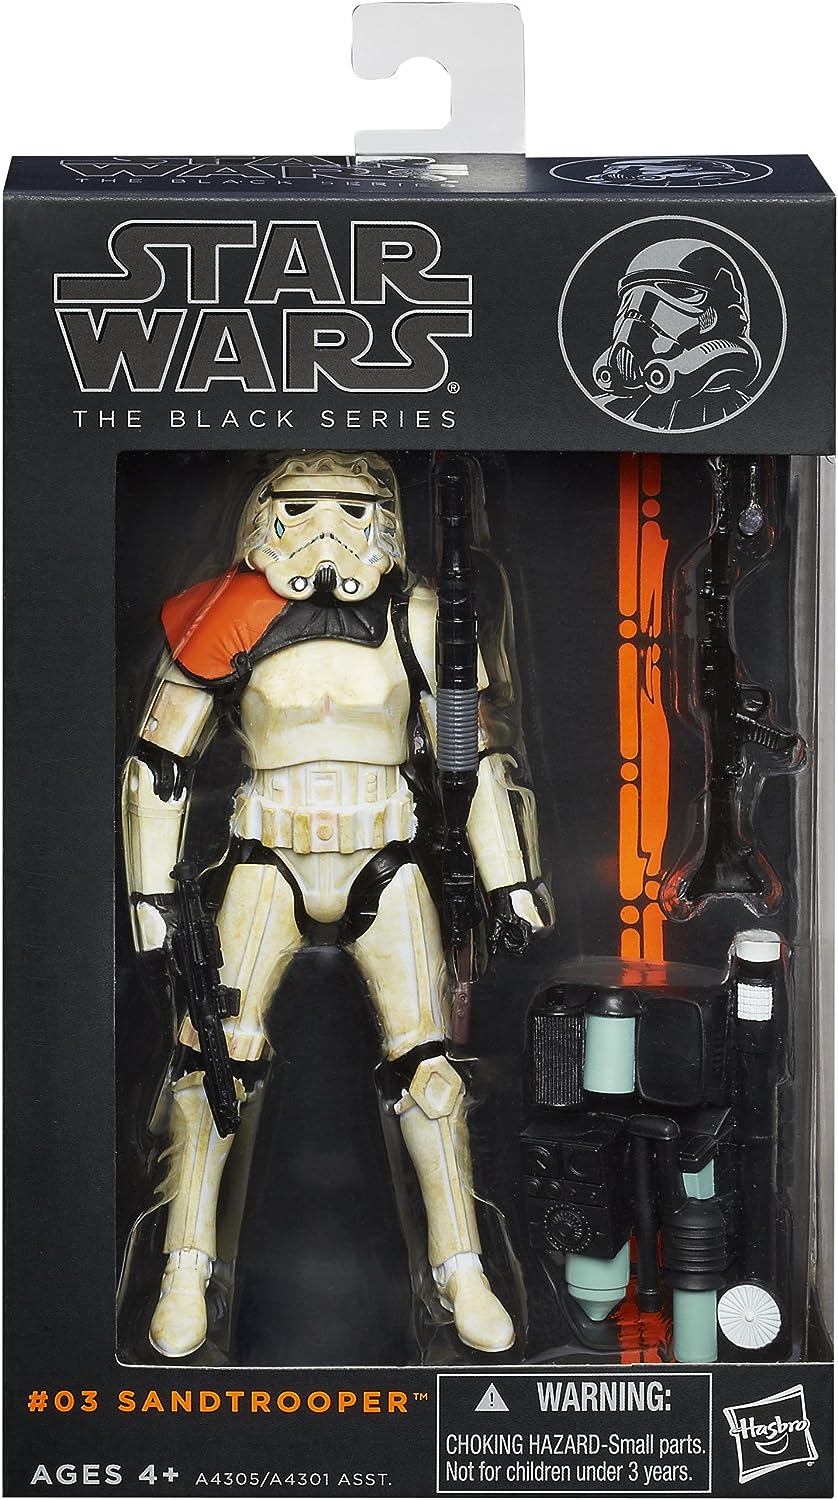 Star Wars Black Series 6 inch Sandtrooper